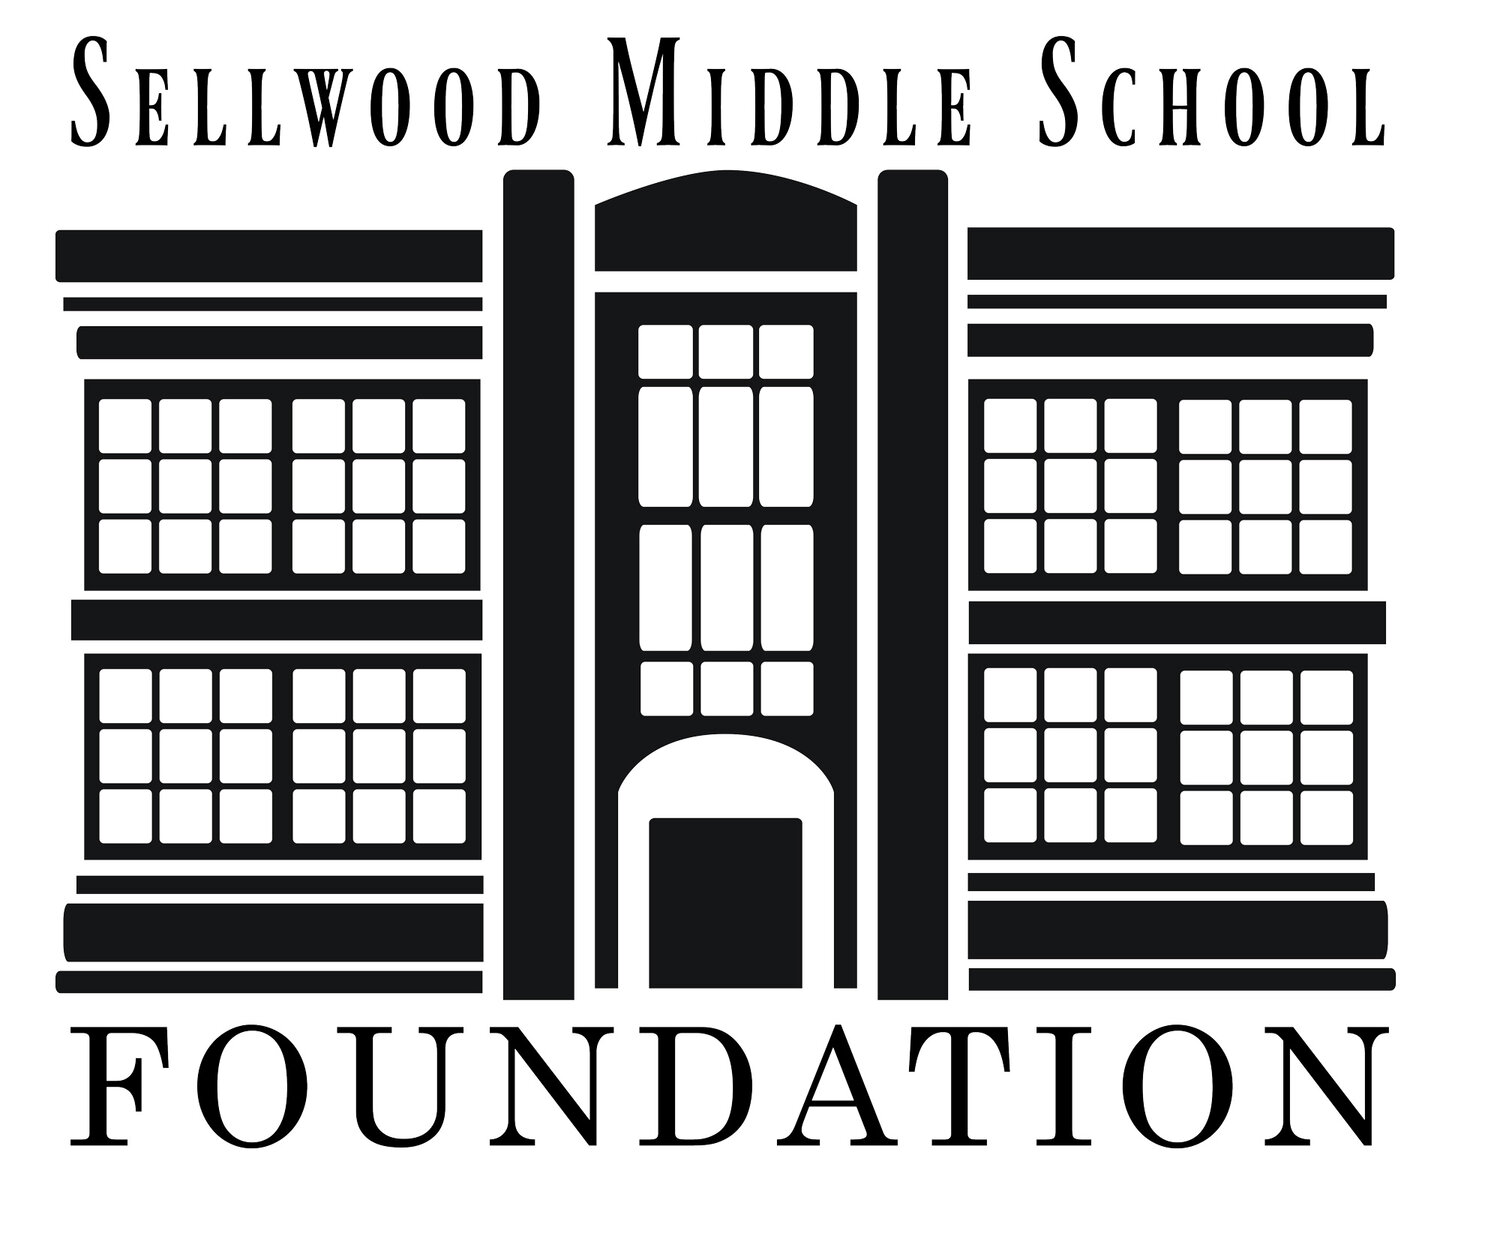 Sellwood Middle School Foundation